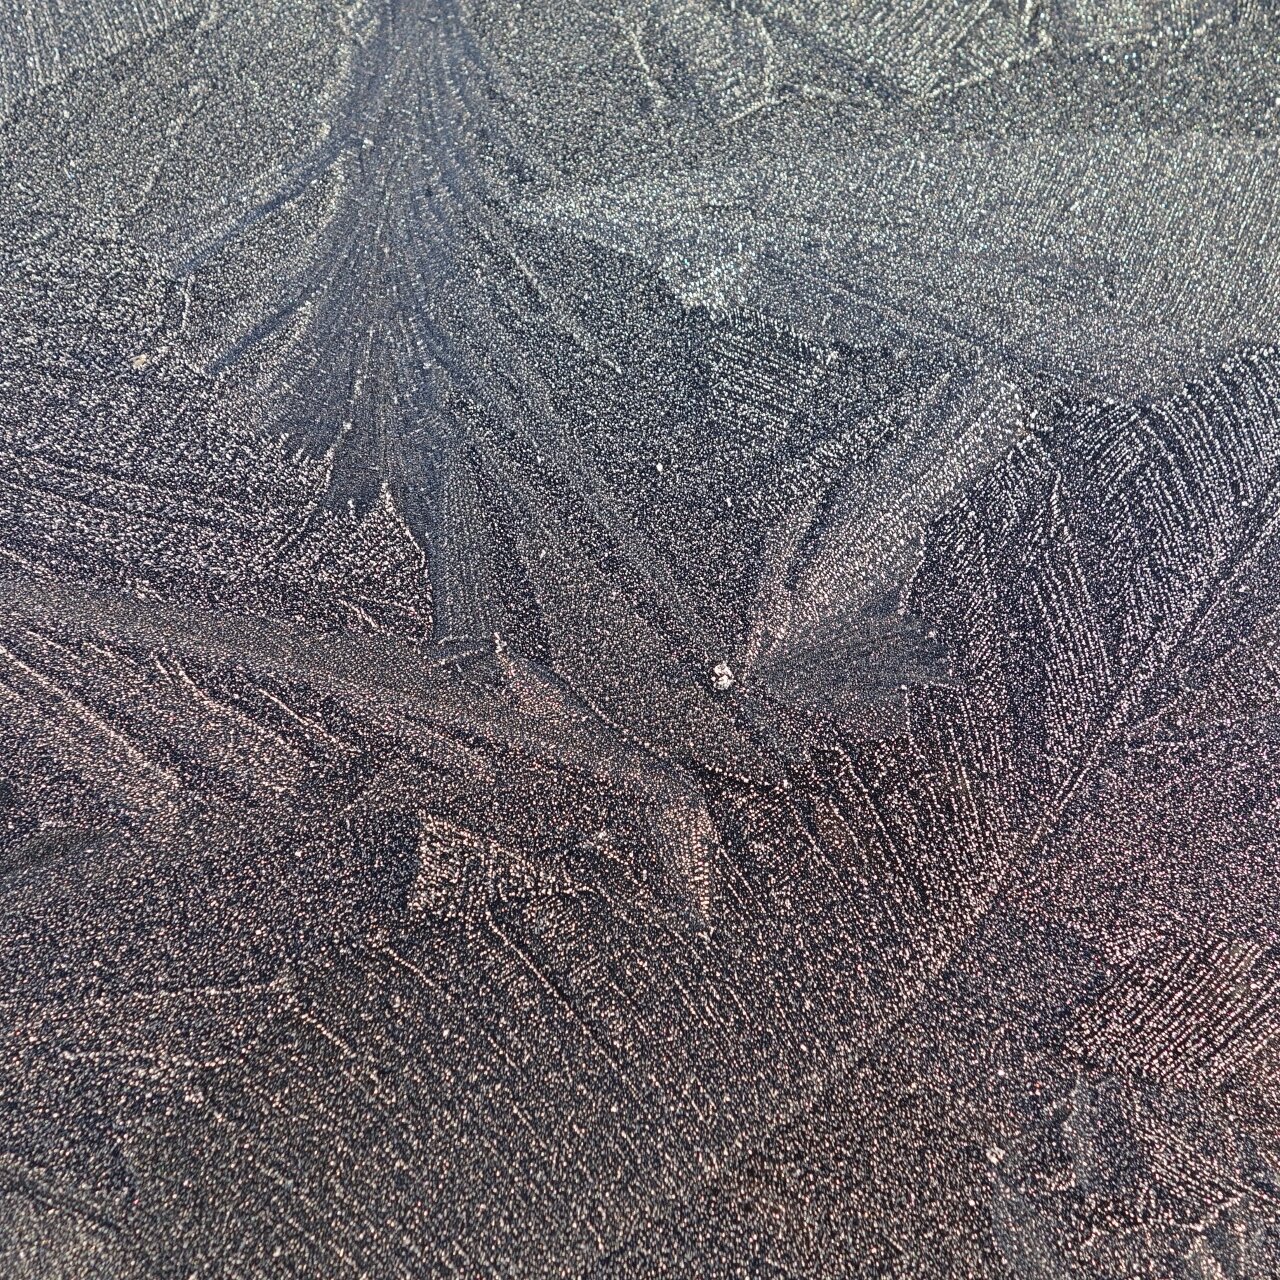 Ice patterns 4 (1280x1280).jpg